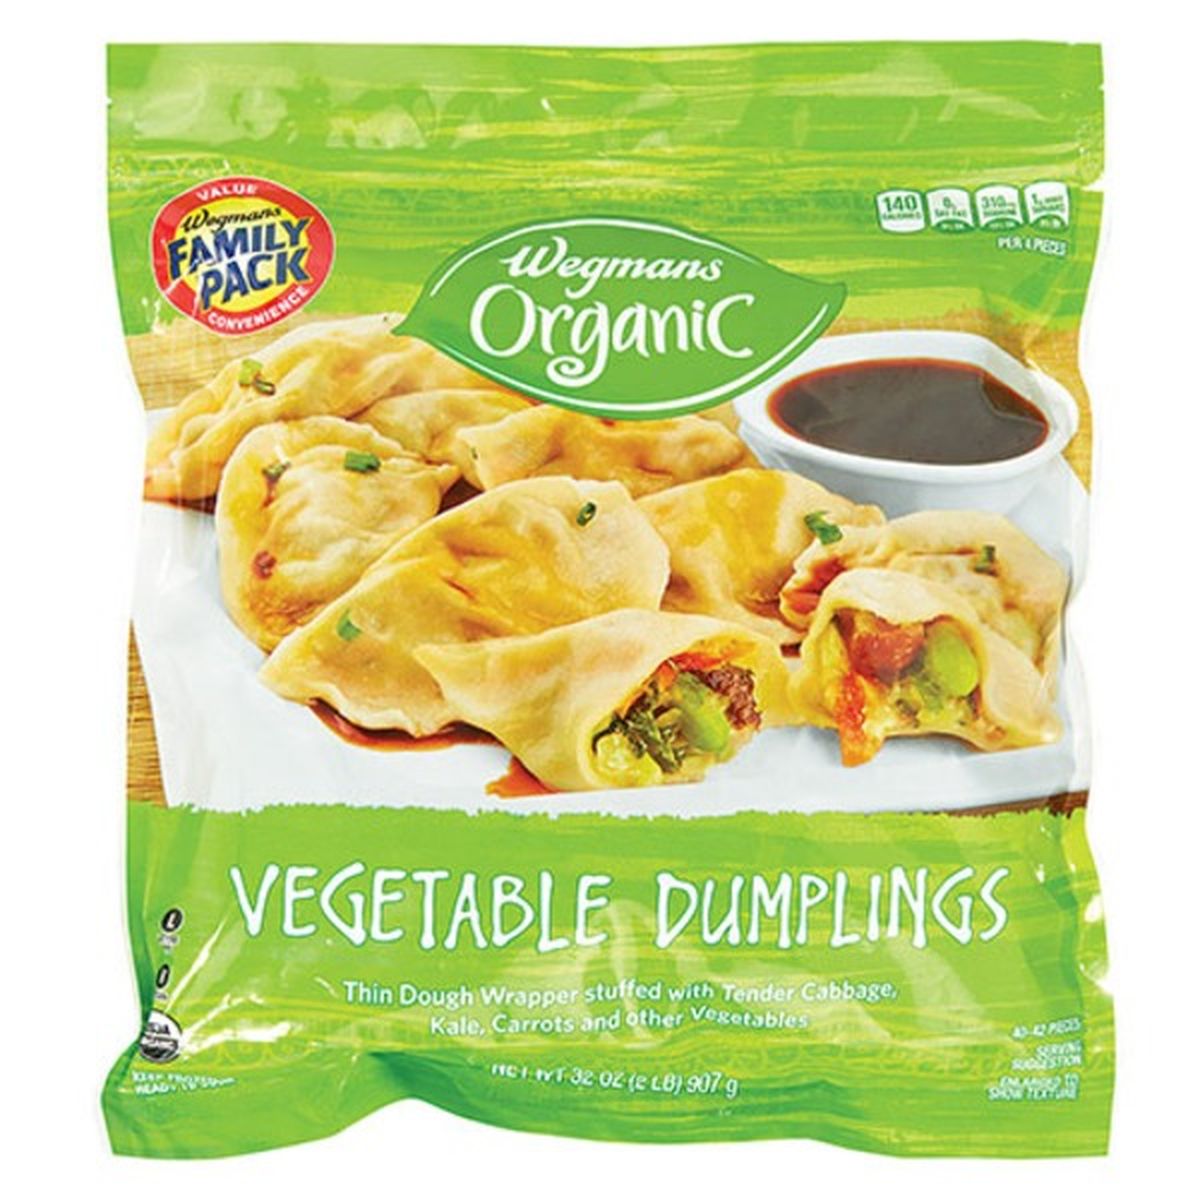 Calories in Wegmans Organic Vegetable Dumplings, FAMILY PACK